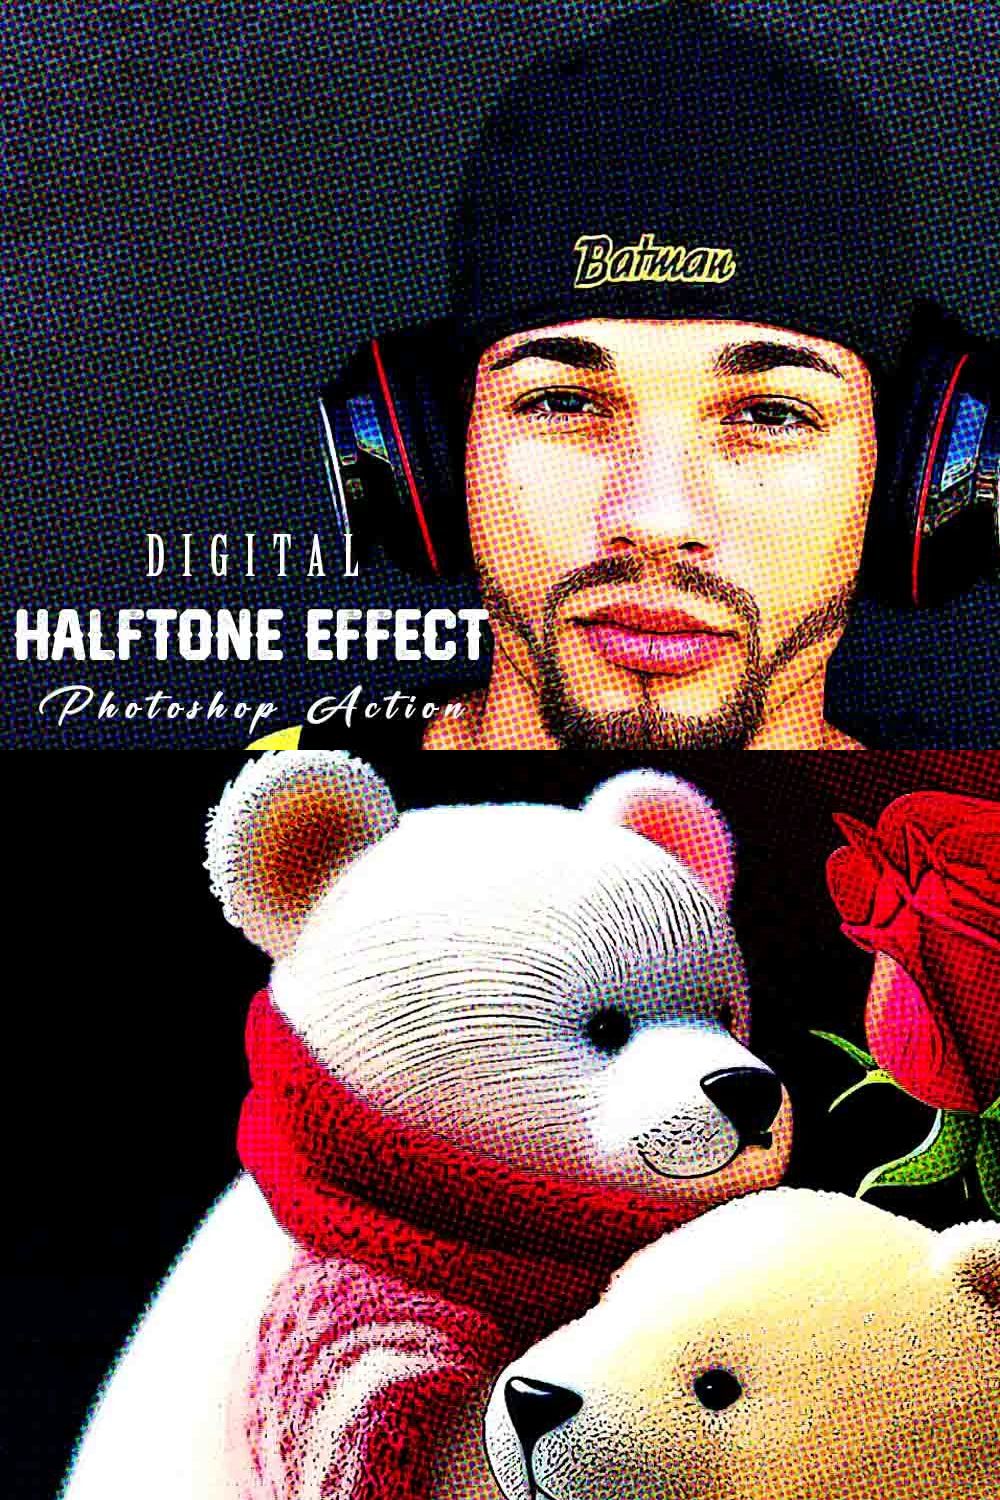 Digital Halftone Effect PS Action pinterest preview image.